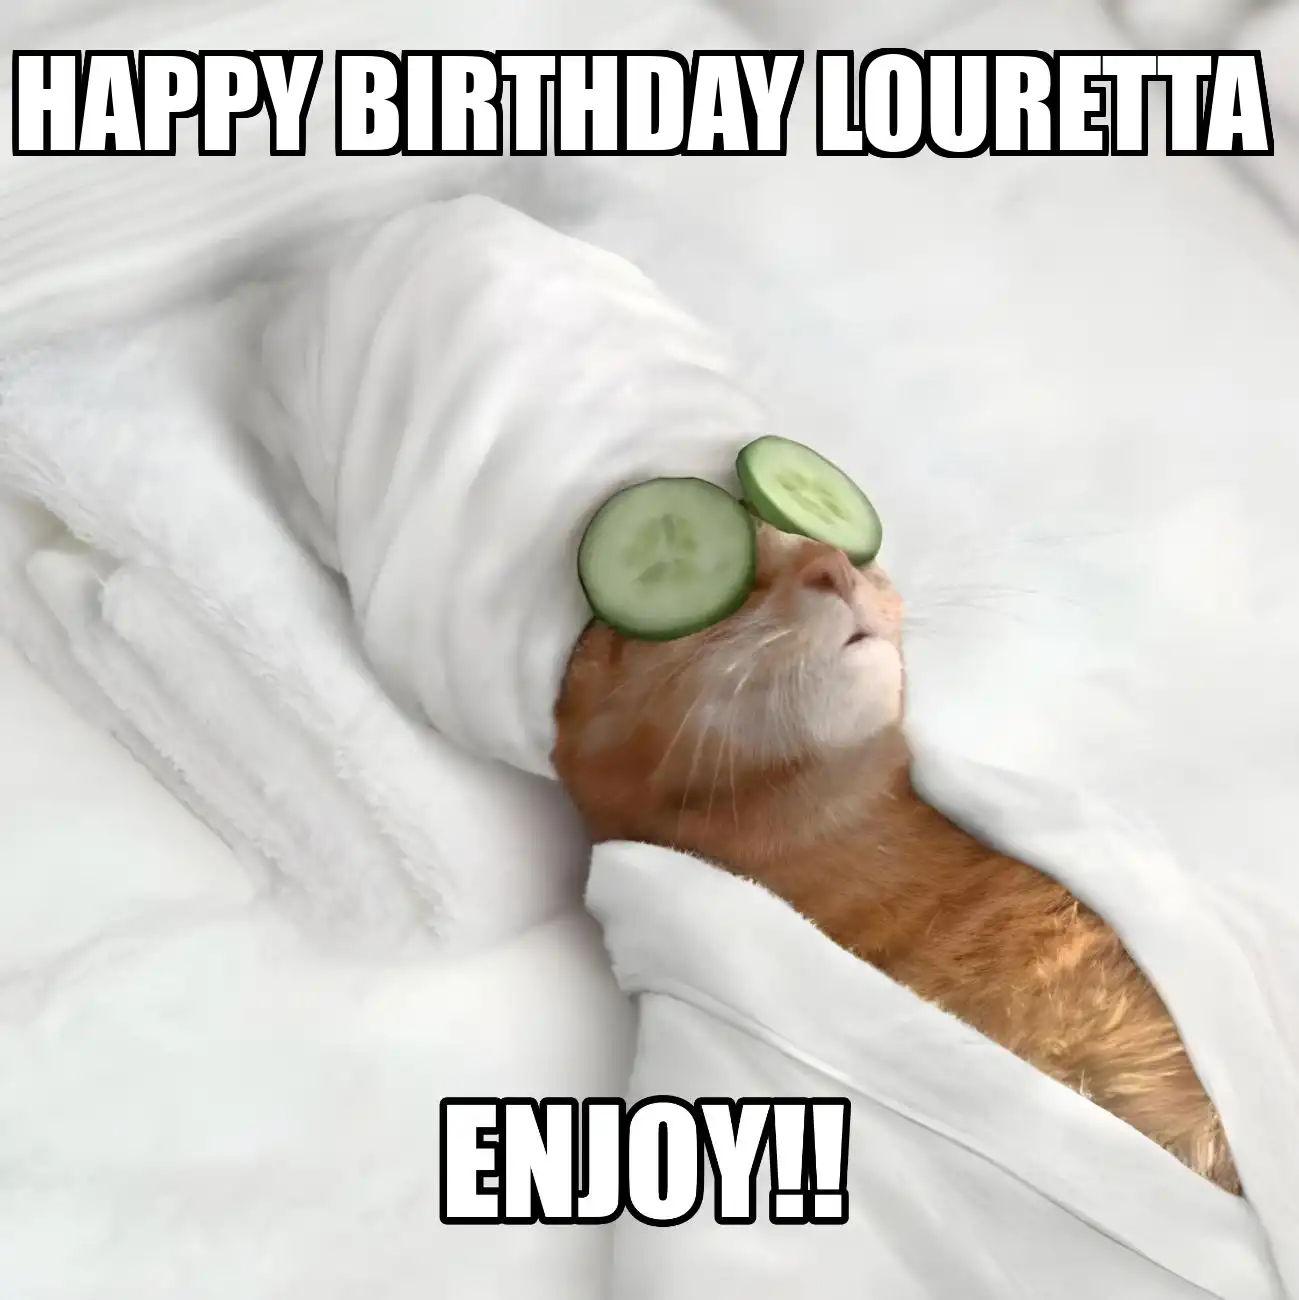 Happy Birthday Louretta Enjoy Cat Meme